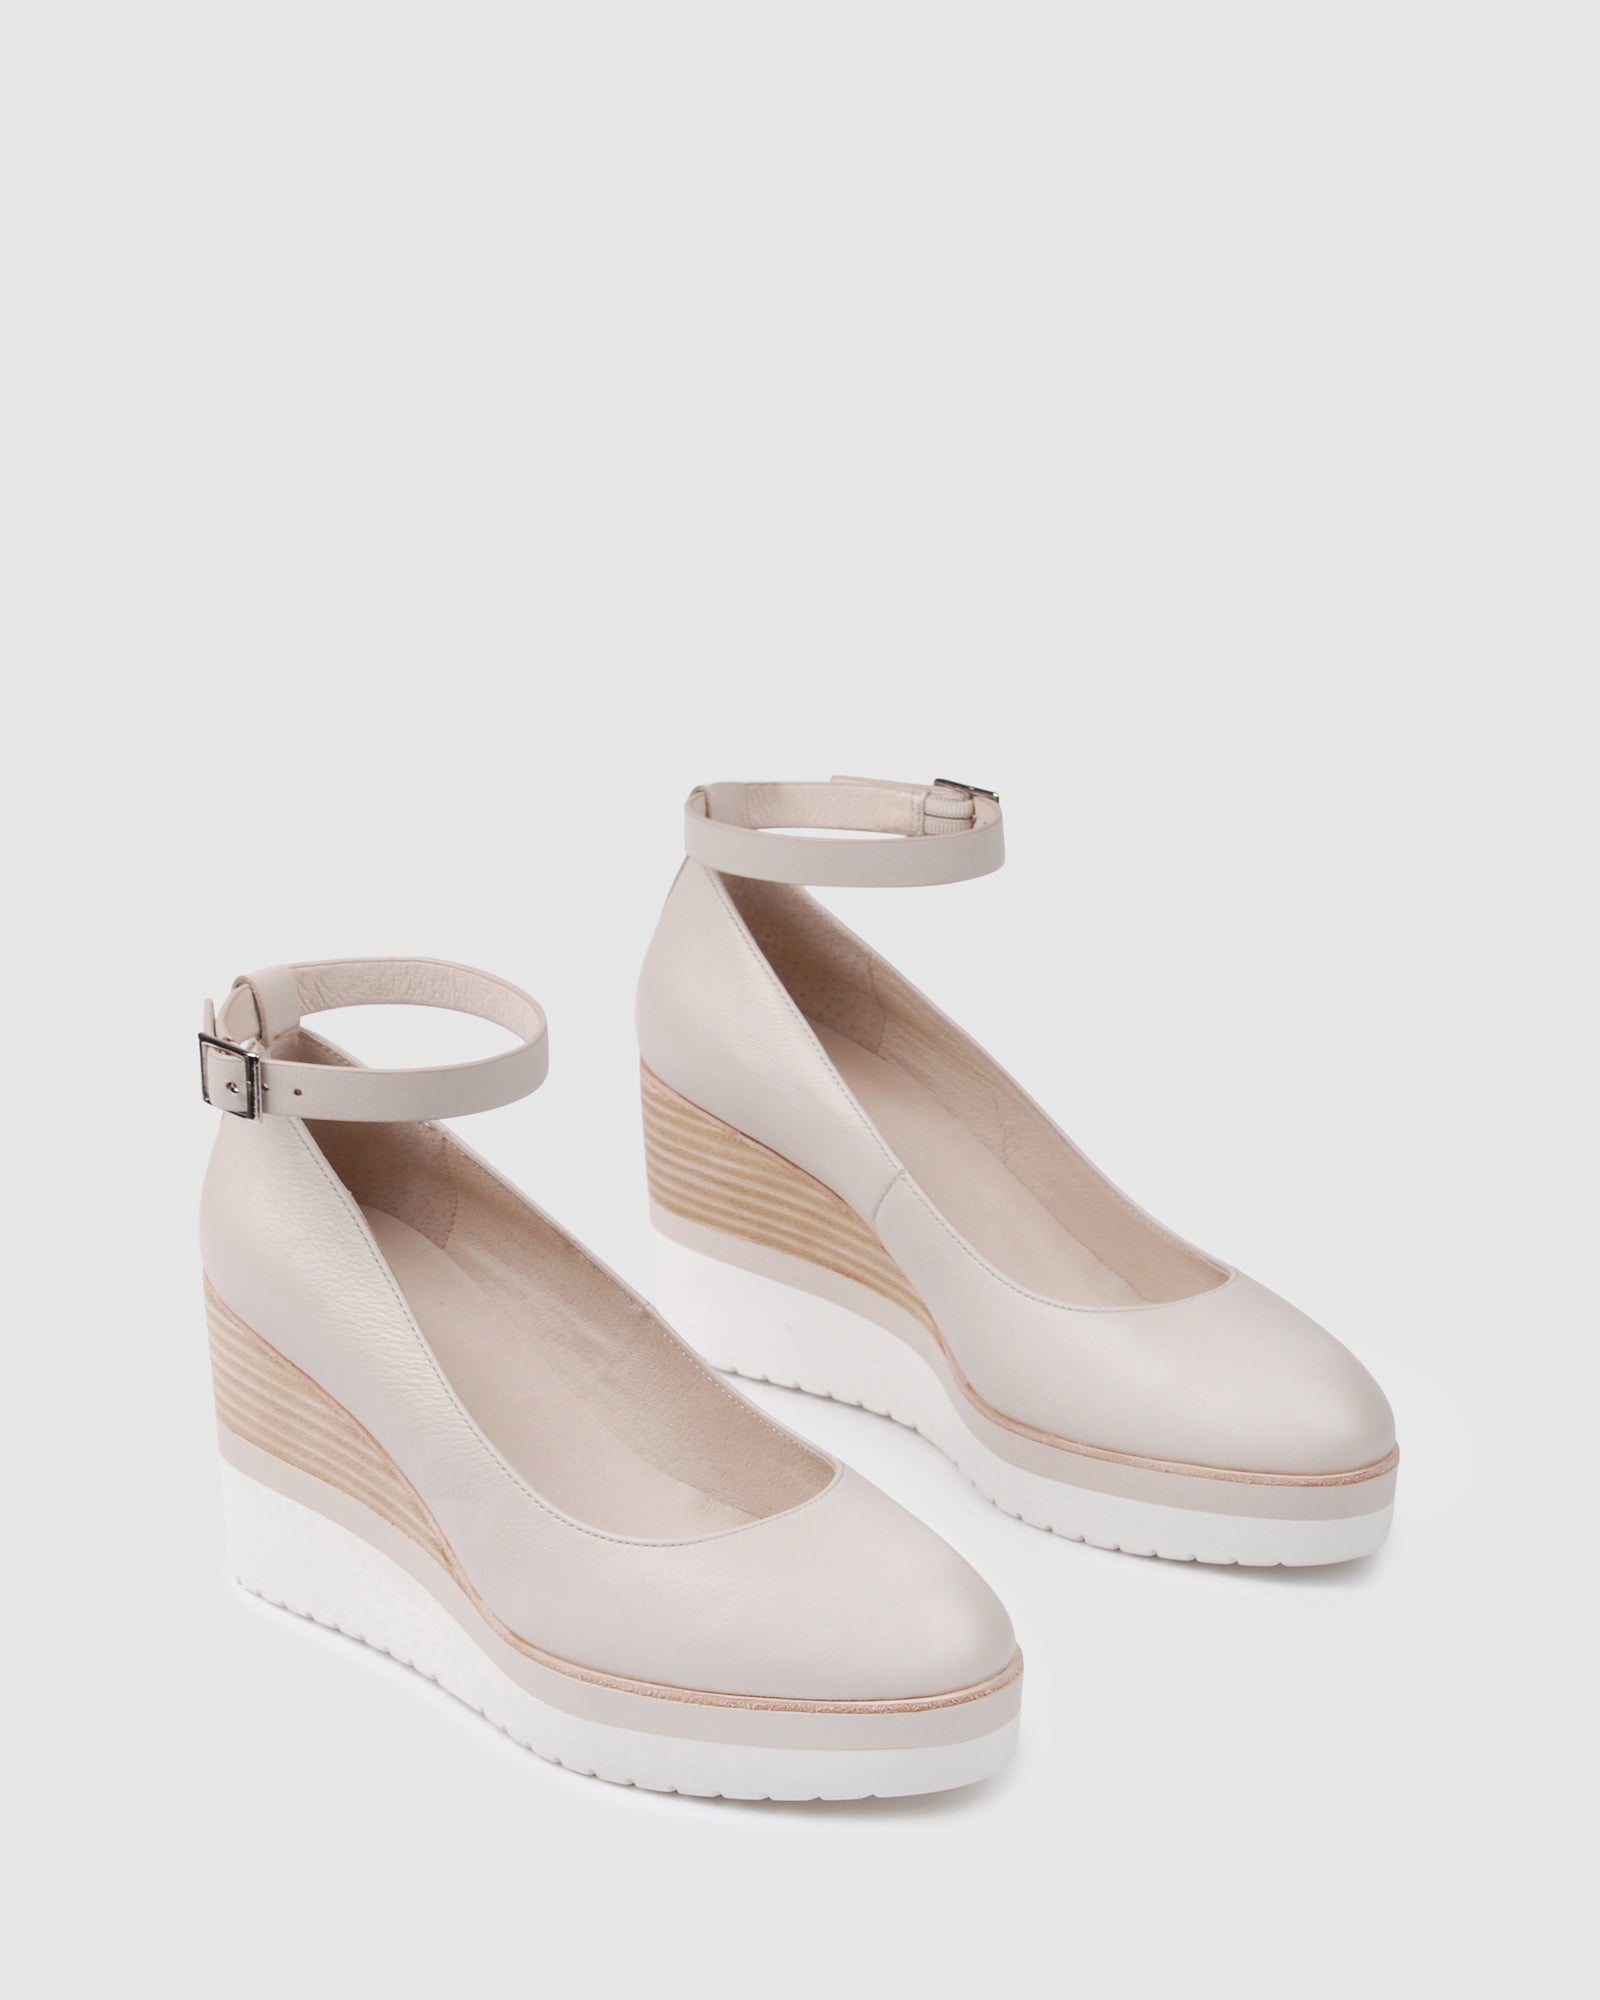 bone coloured heels